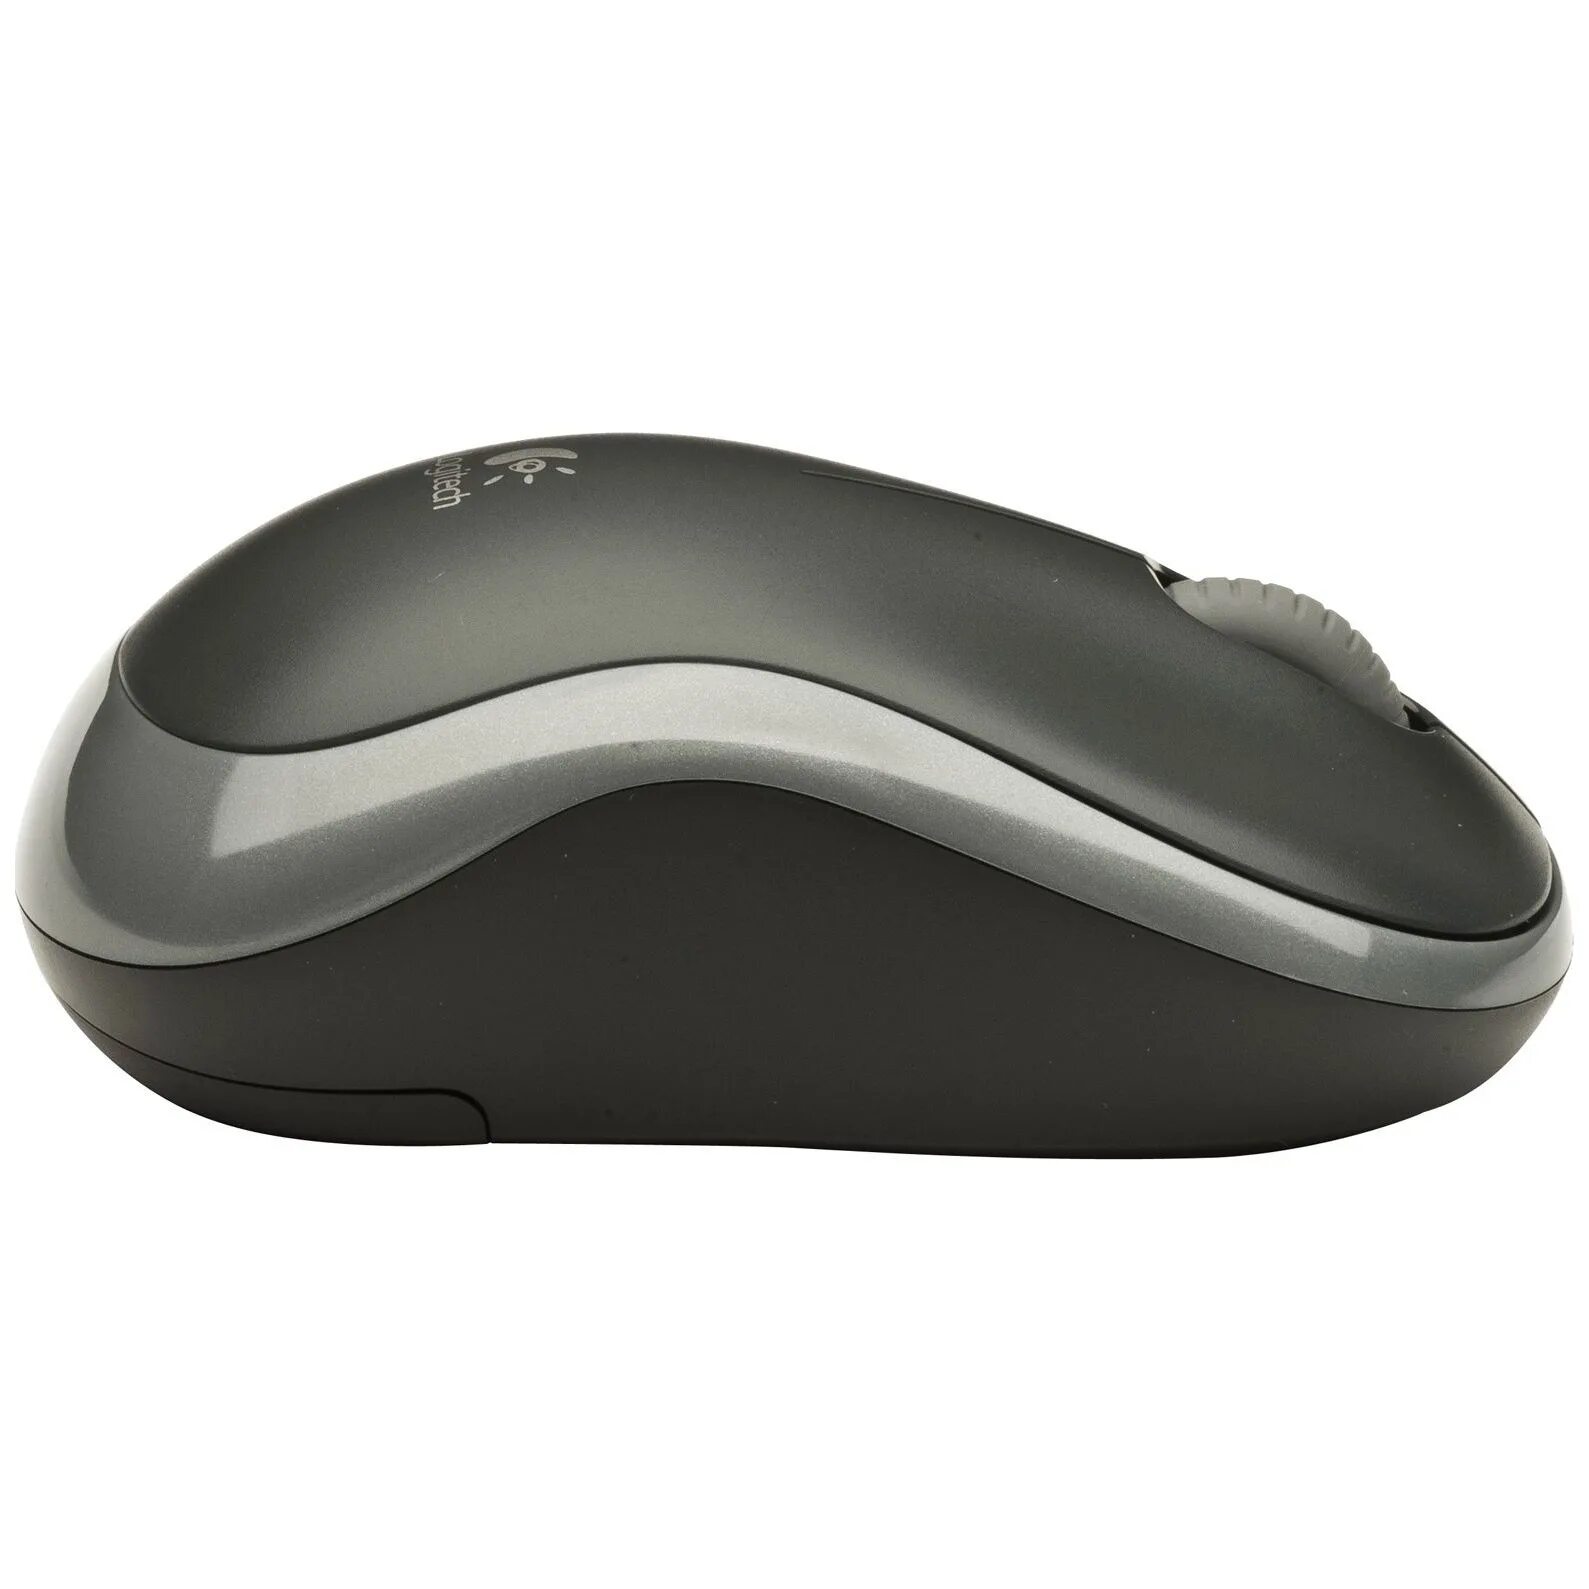 Мышь беспроводная m185. Logitech m185 Grey. Мышка Logitech m185. Мышка беспроводная Logitech m185. Компьютерная мышь Logitech Wireless Mouse m185 Grey-Black (910-002238).